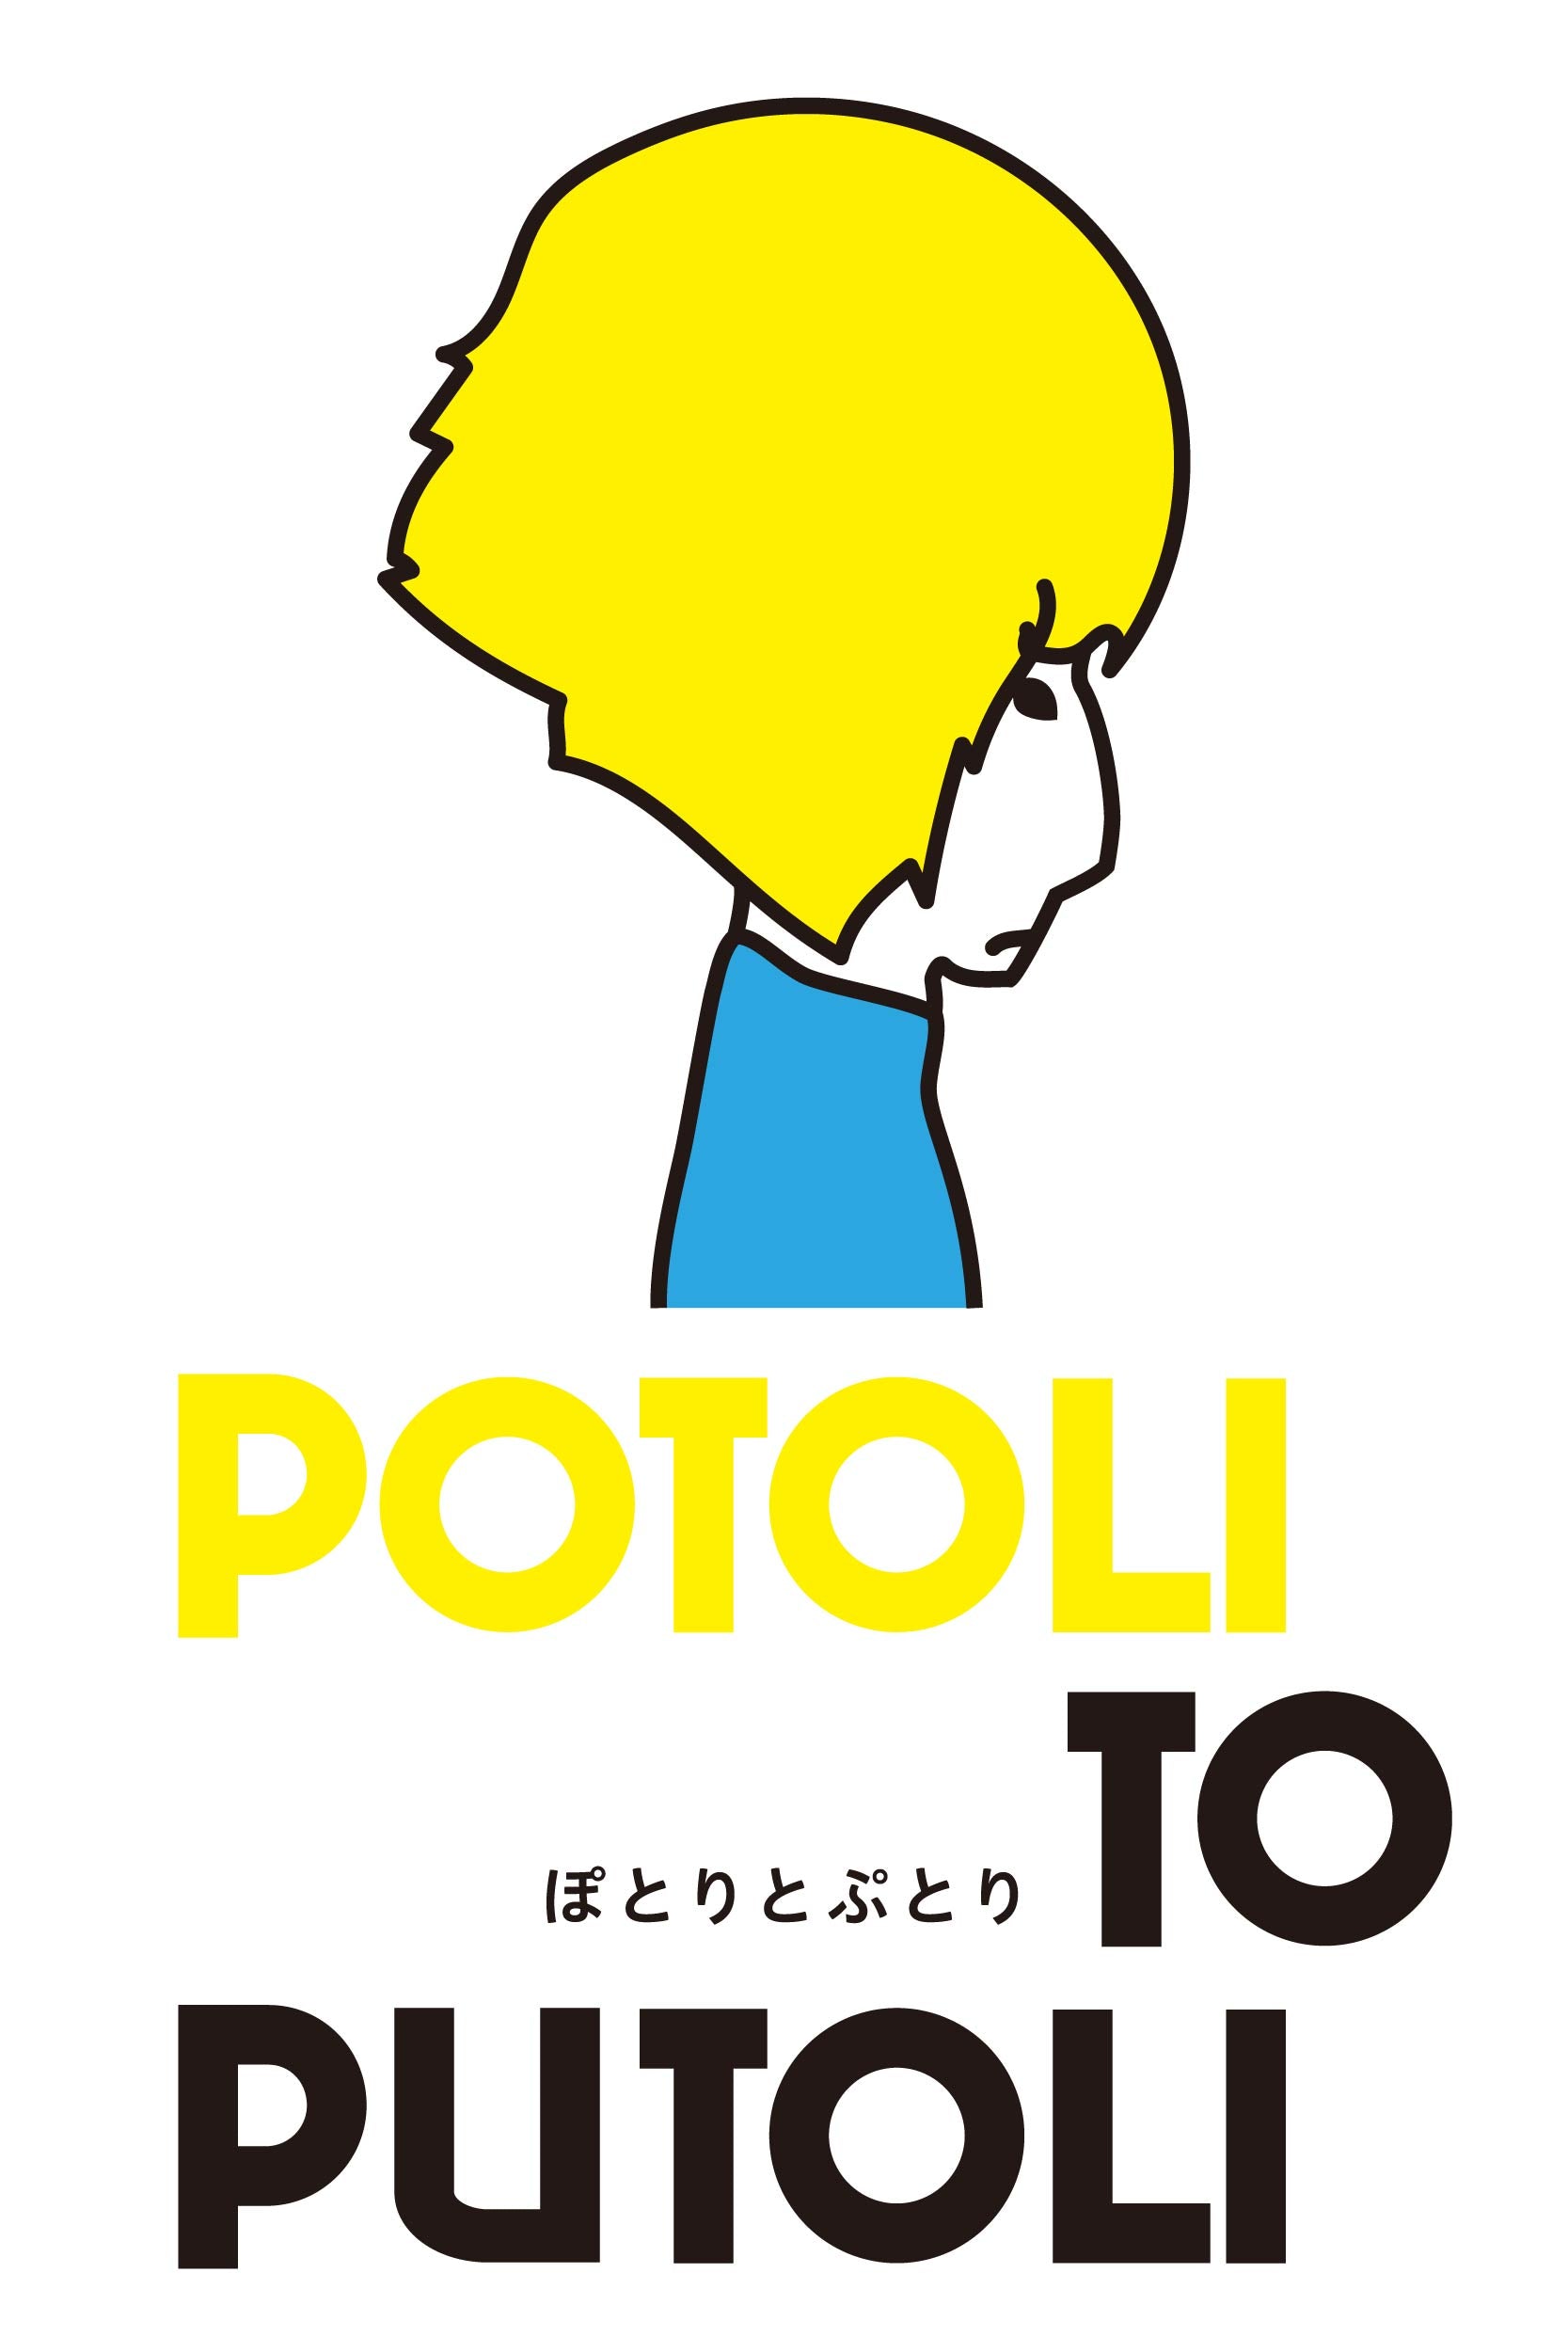 POTOLI TO PUTOLI - 創作ユニット「POTOLI TO PUTOLI」のウェブサイト